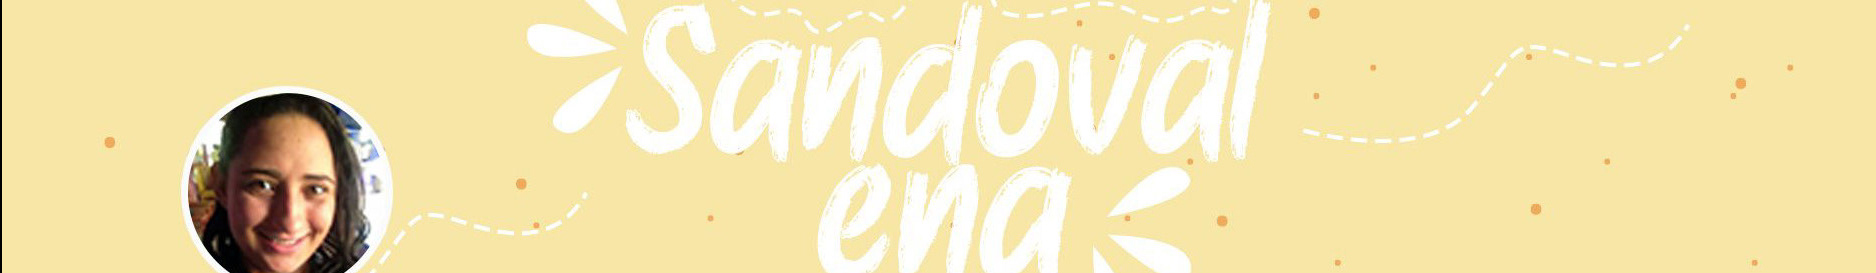 Ena Sandoval's profile banner